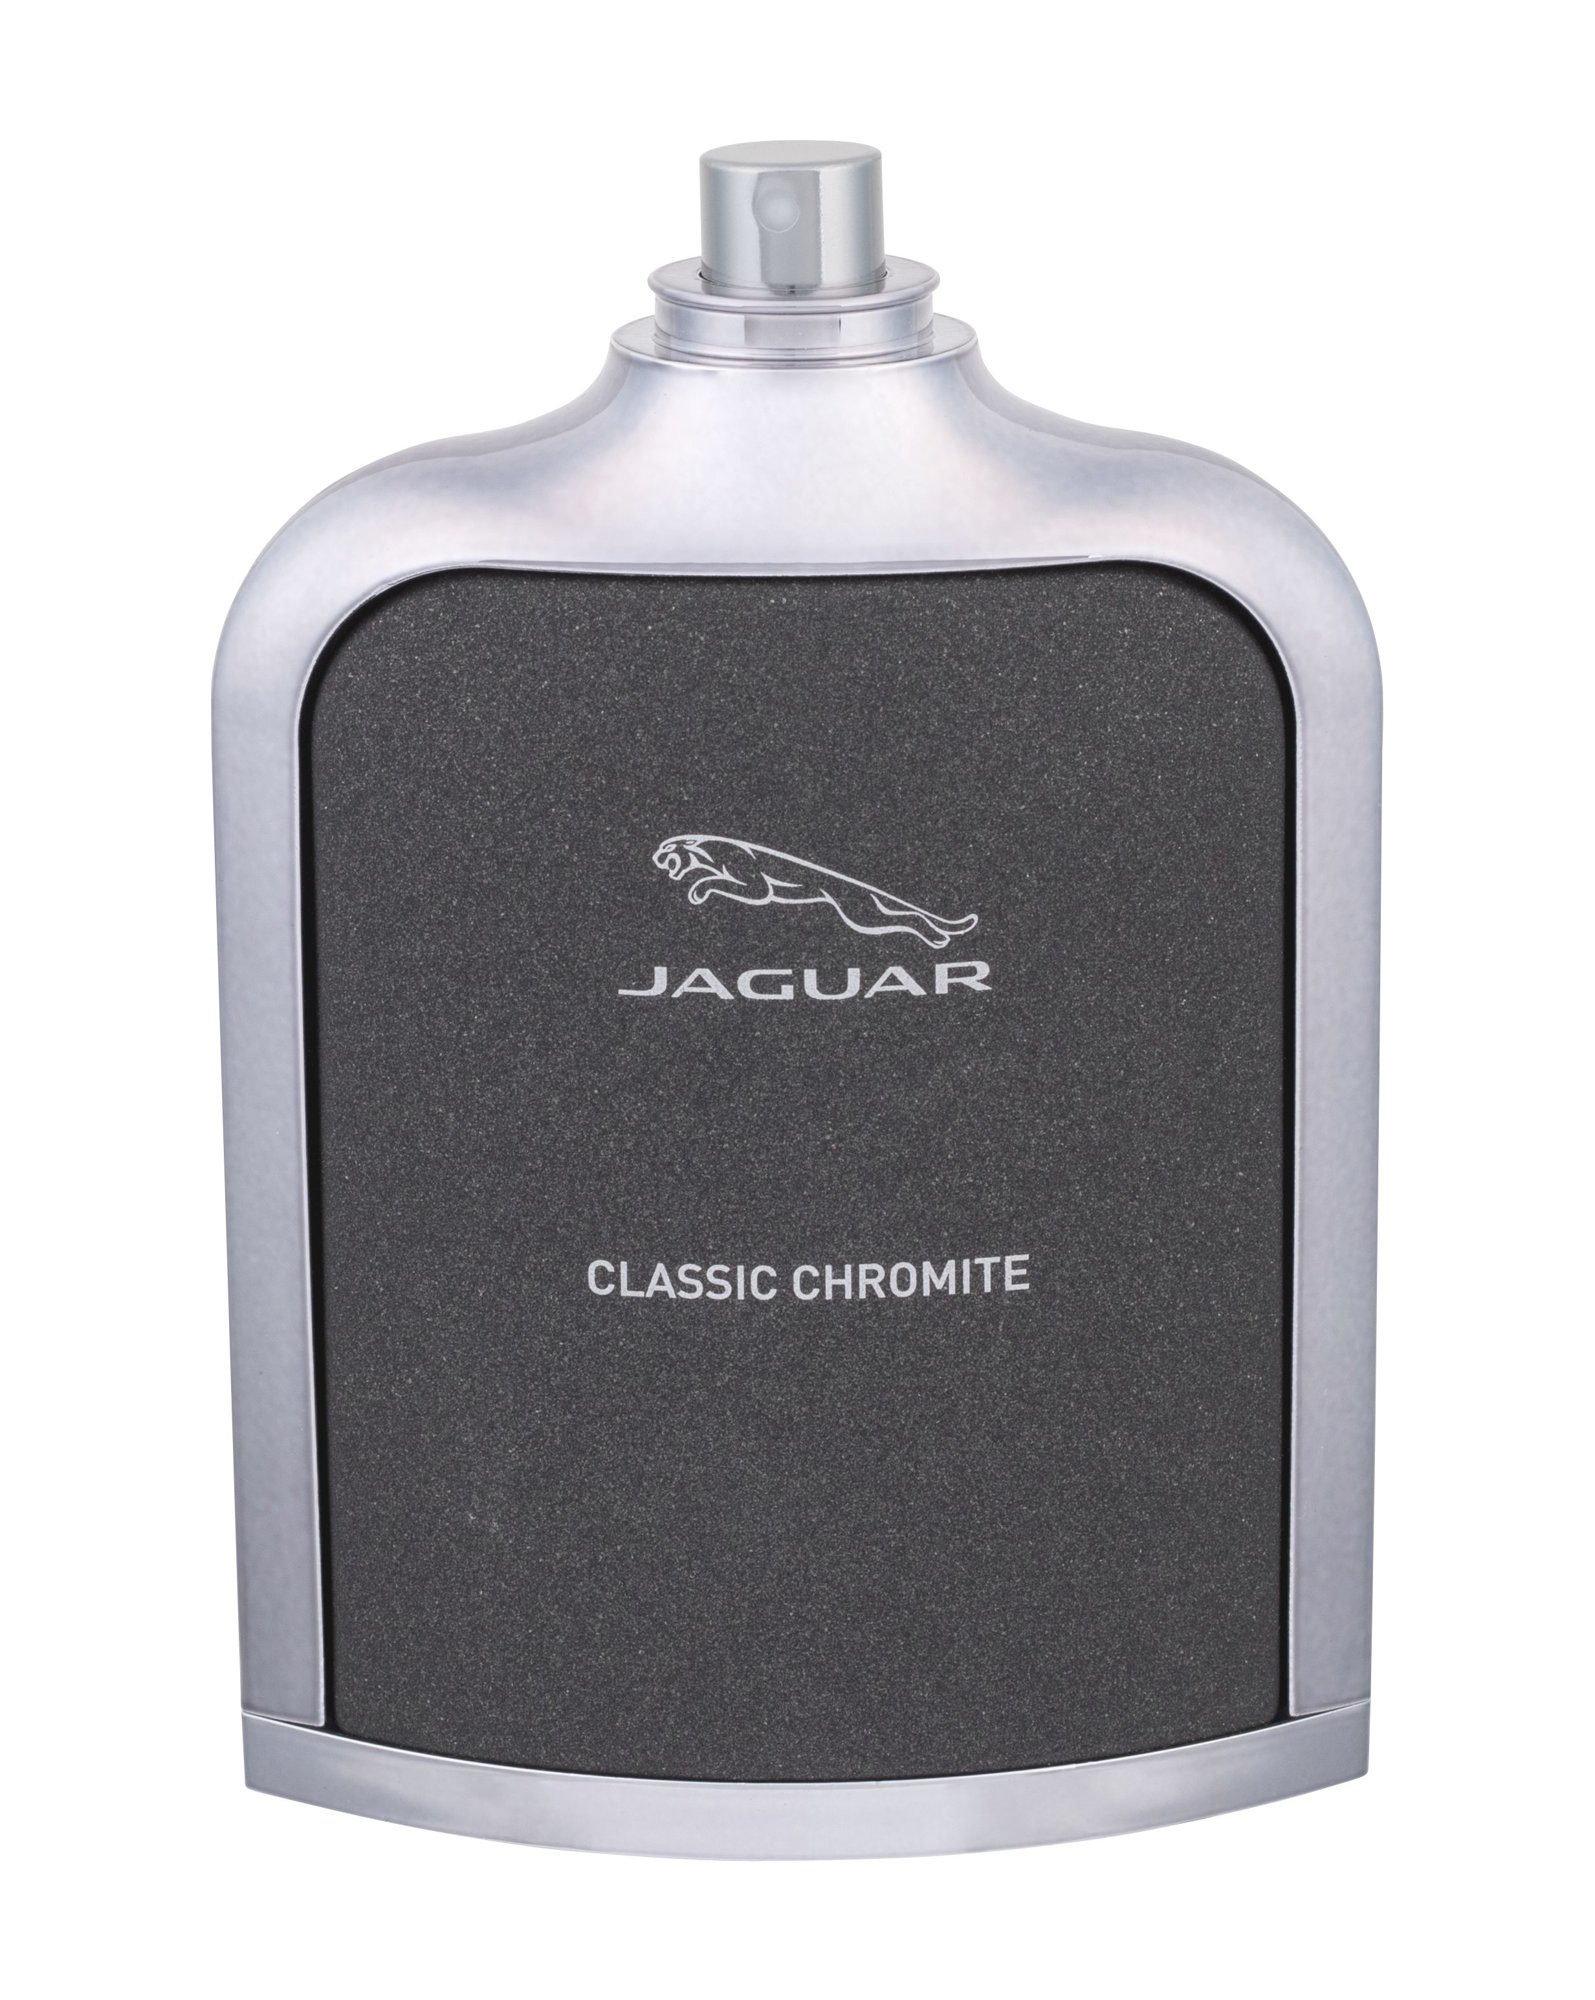 Jaguar Classic Chromite, Toaletní voda 100ml, Tester